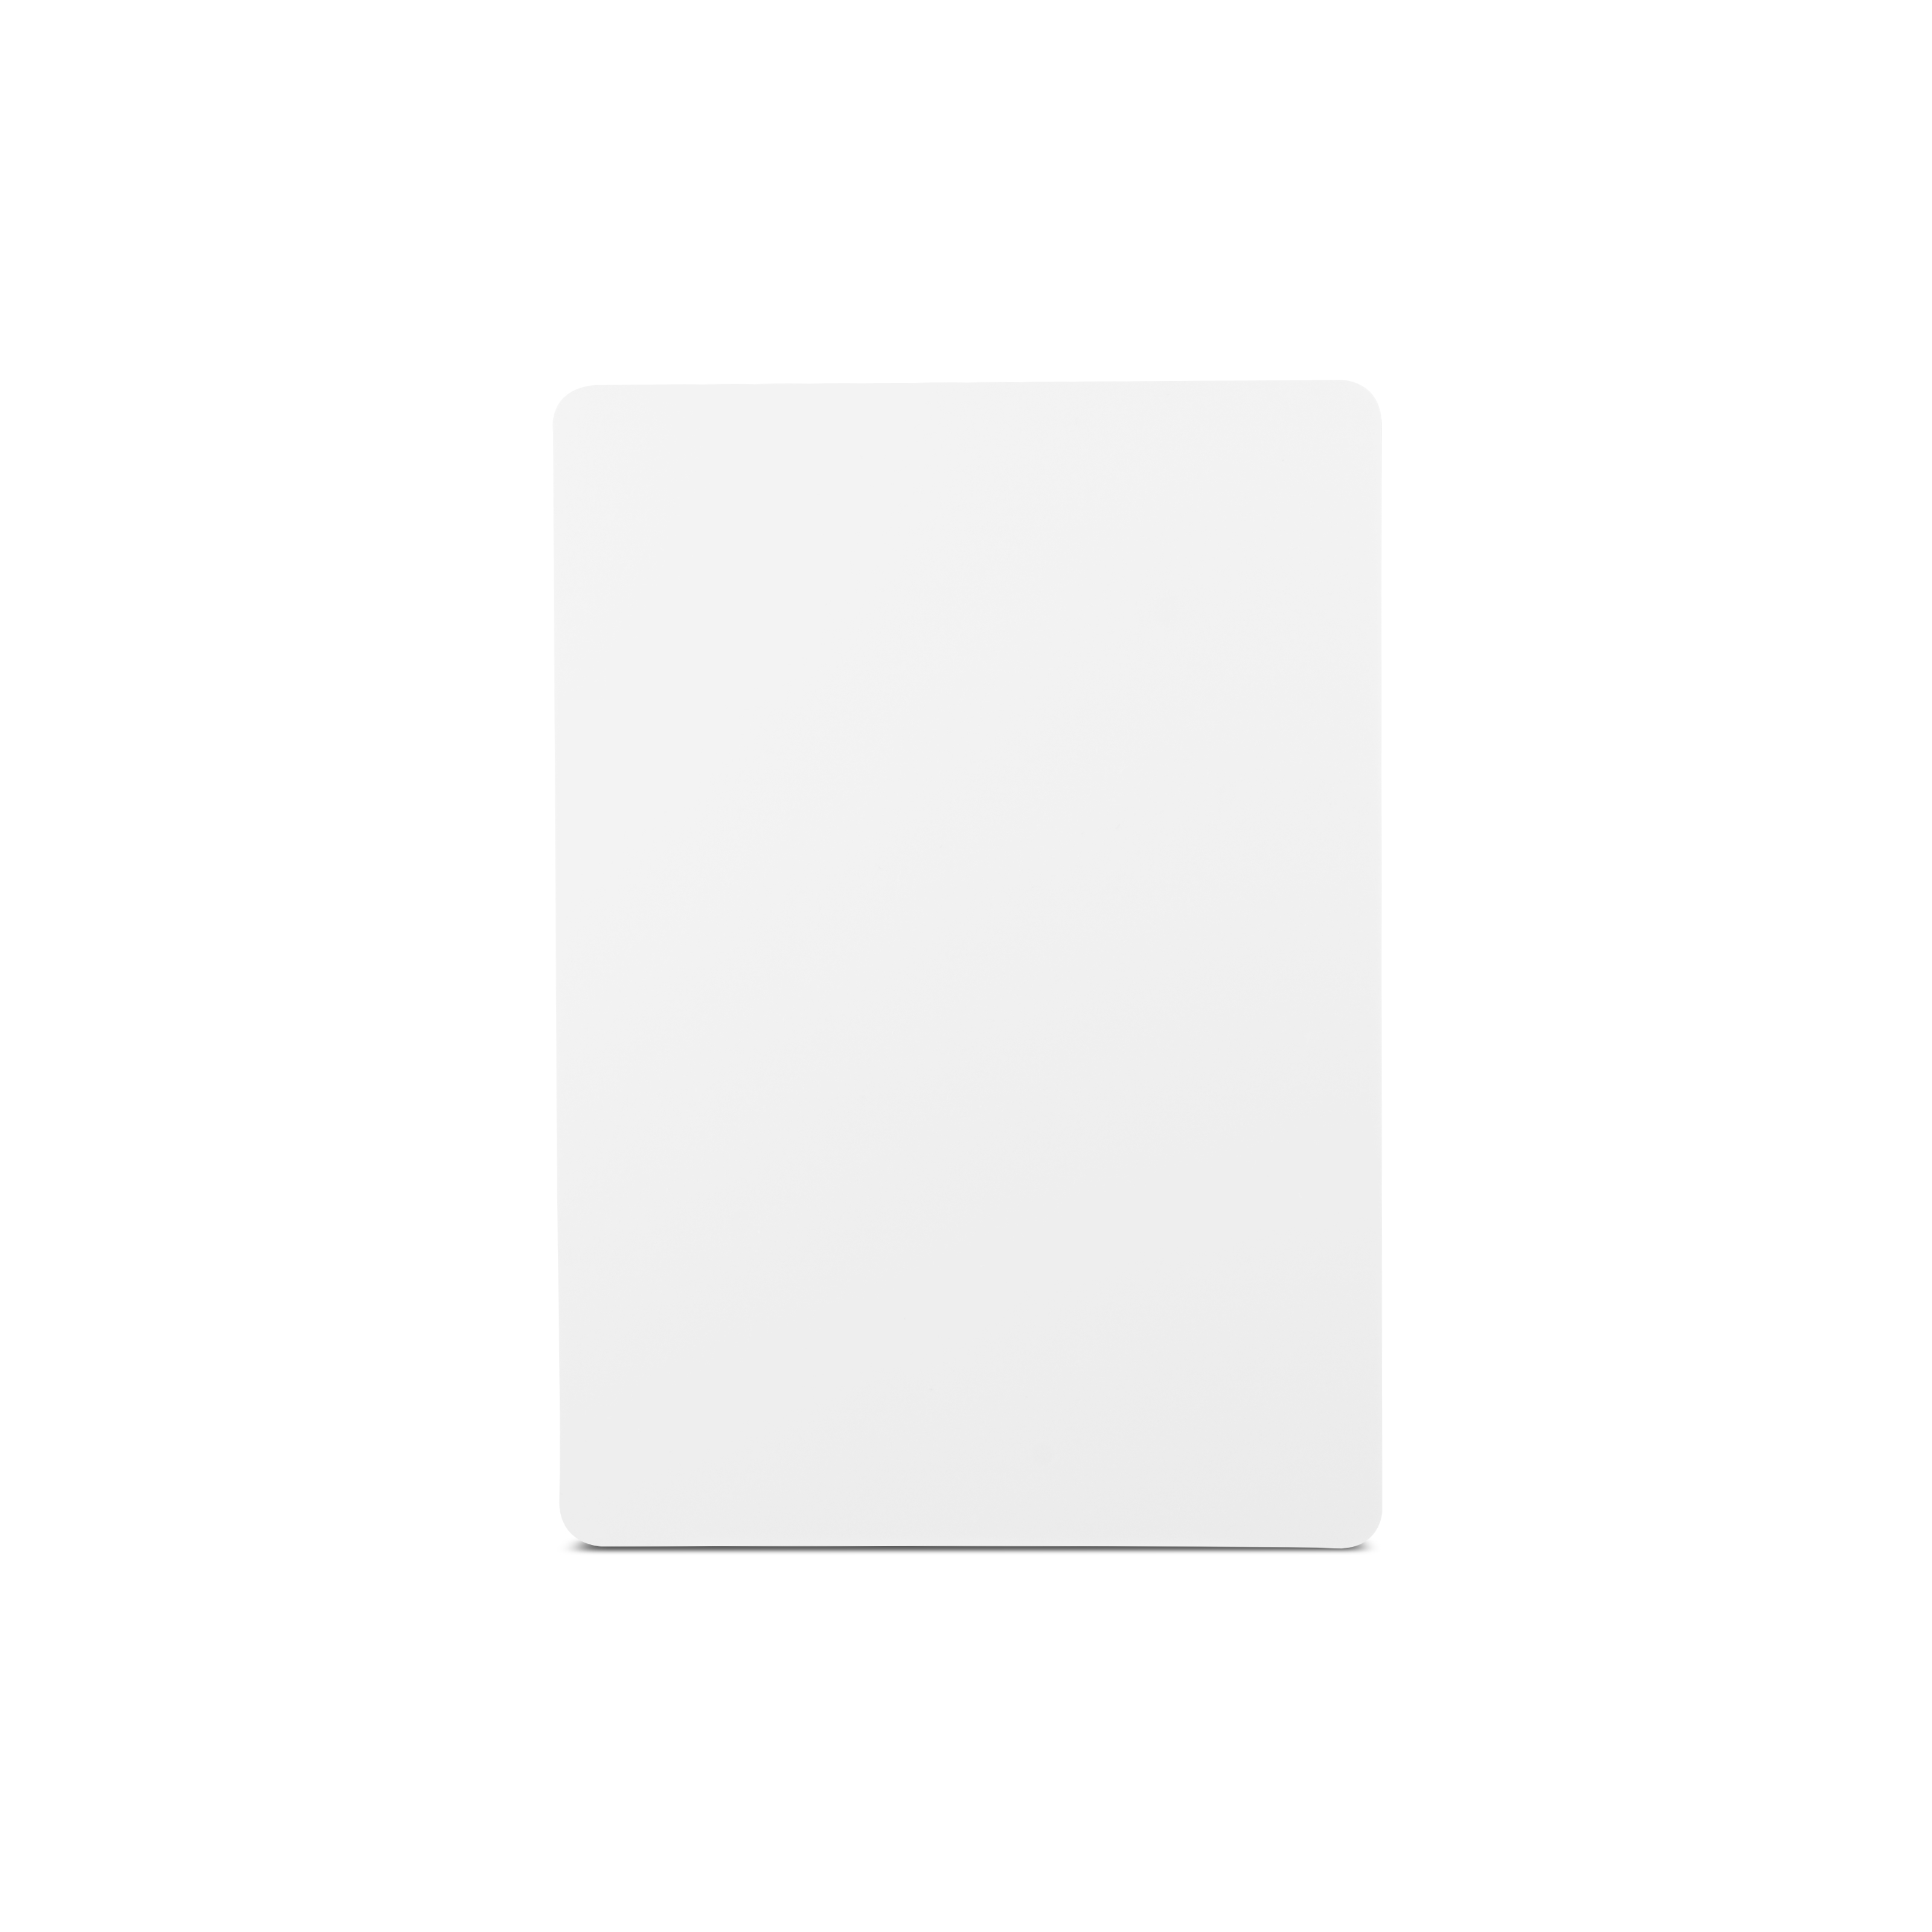 NFC Schild PETG beidseitig bedruckt - A6 - NTAG213 - 180 Byte - weiß glänzend